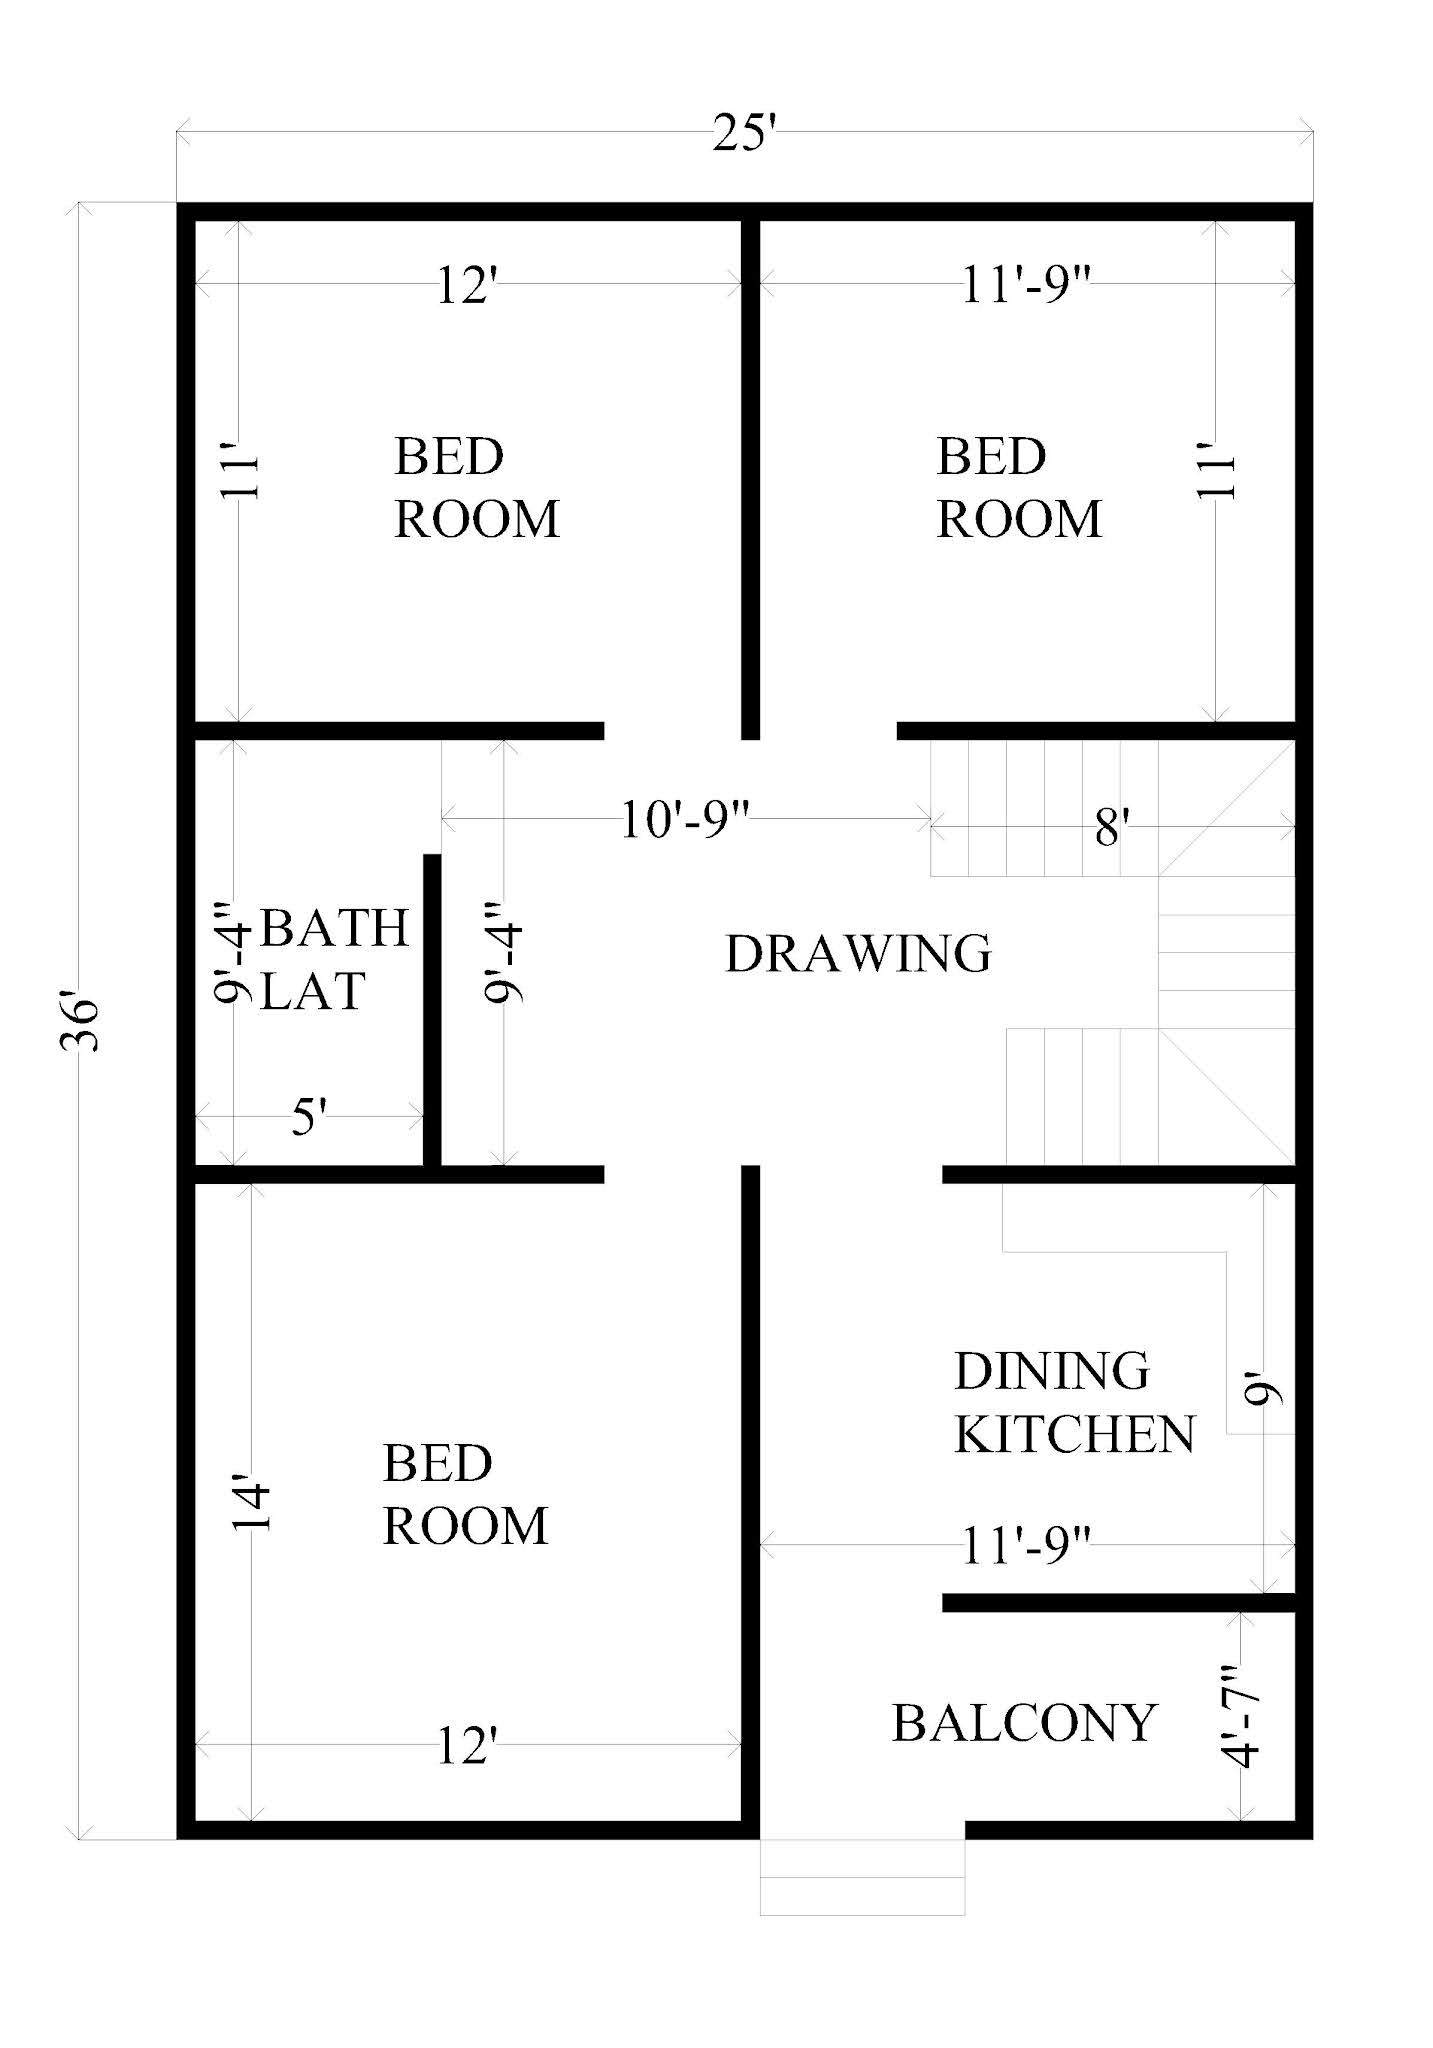 900 sqft house plan with 3 bed rooms II 25 x 36 ghar ka